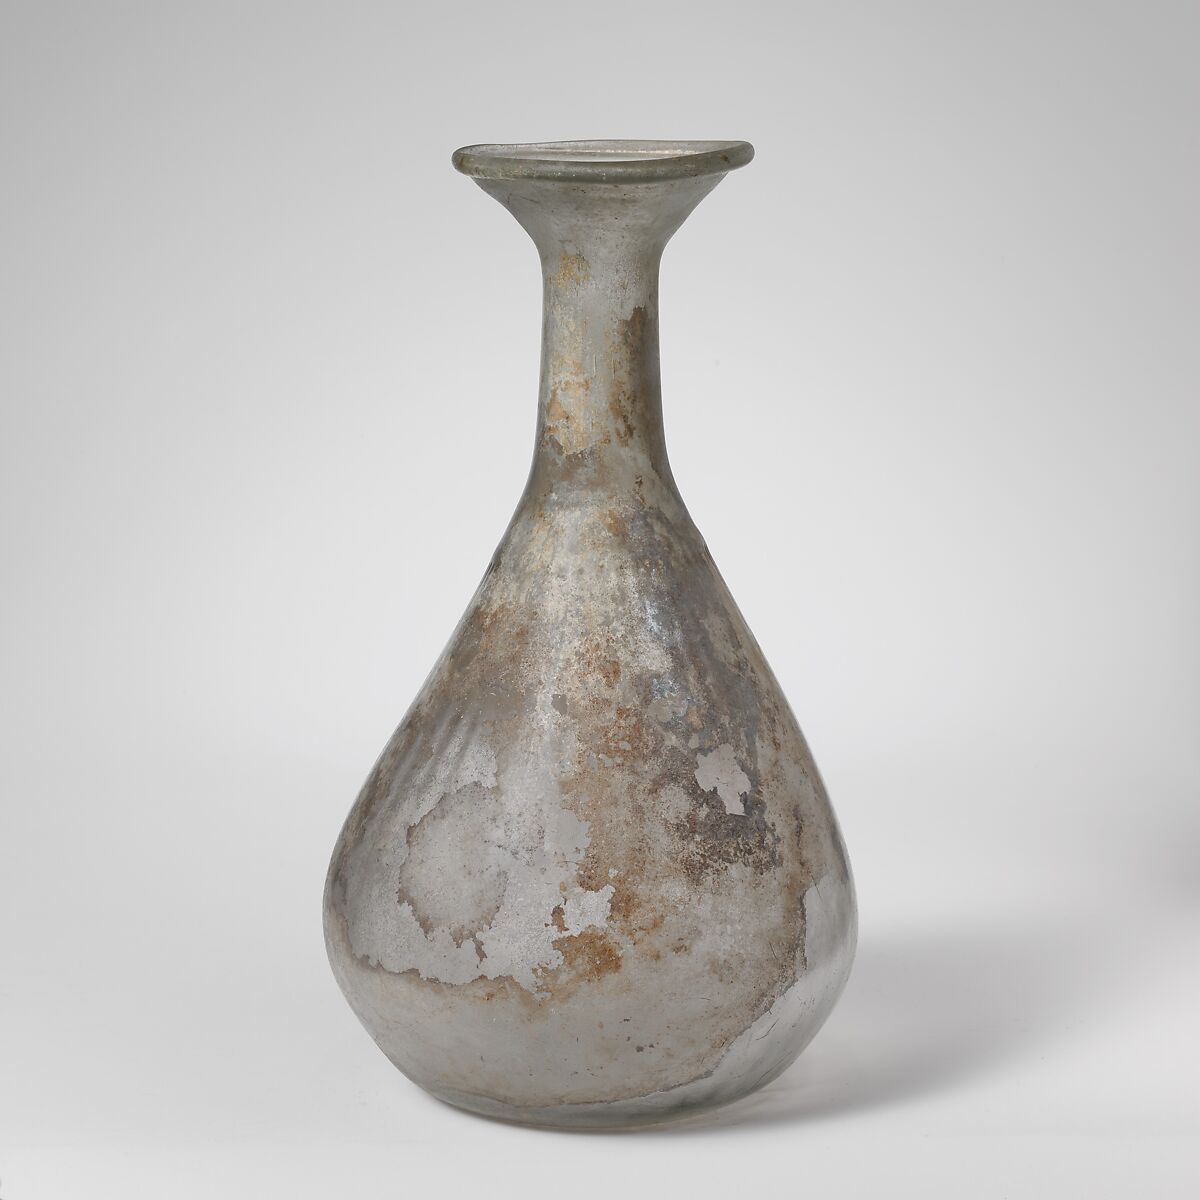 Glass flask, Glass, Roman, Syrian 